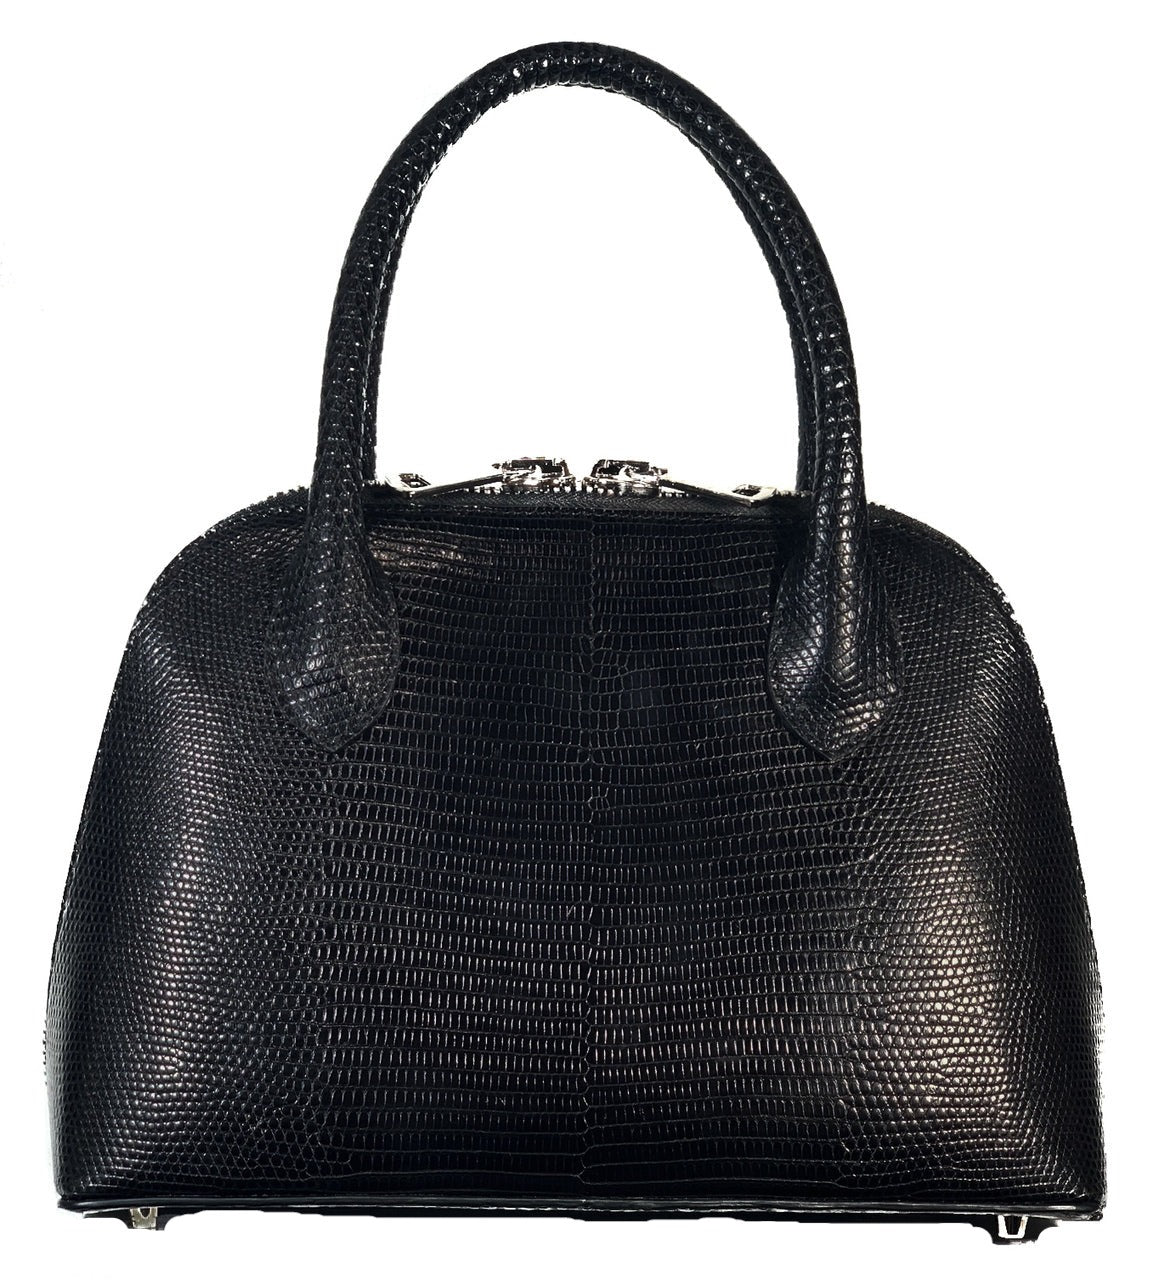 Studio Burke DC custom hand bag bespoke luxury exotic leather superior quality lizard alligator 1